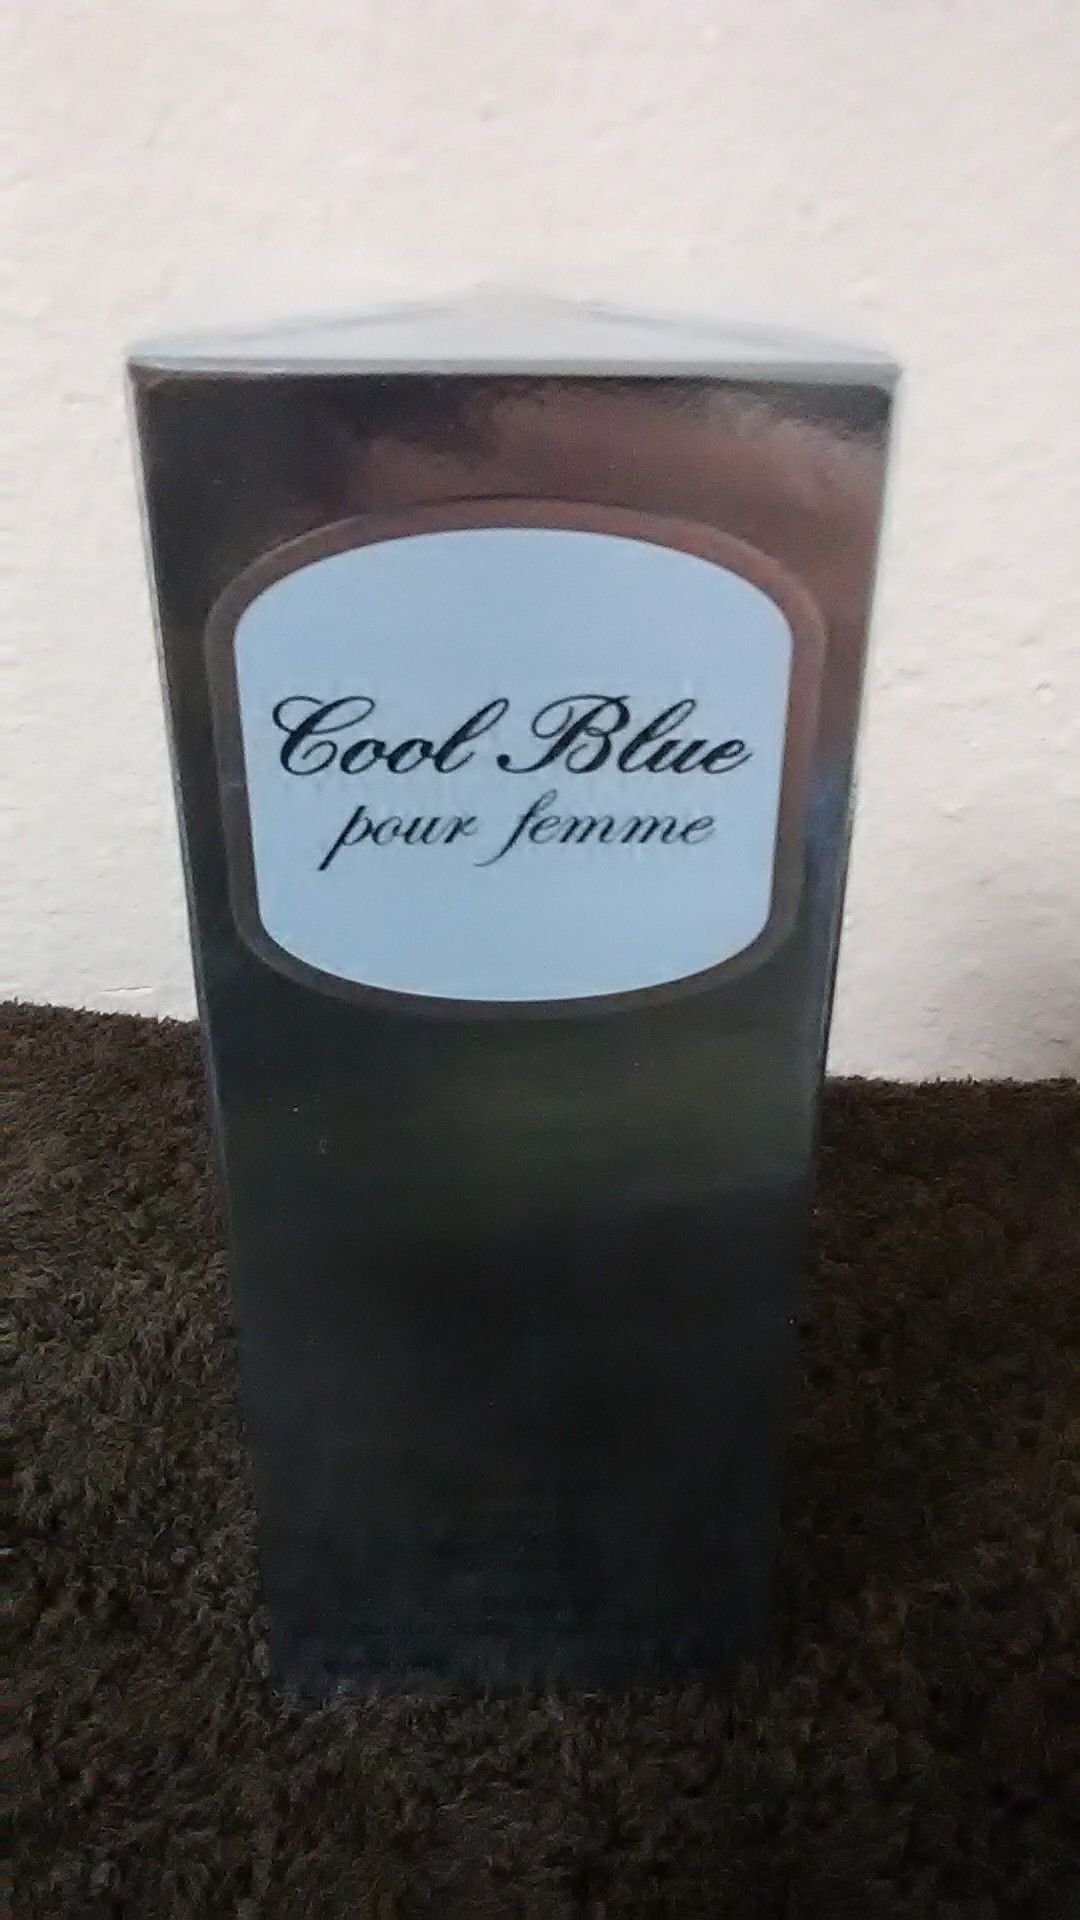 Version Perfume Cool Water